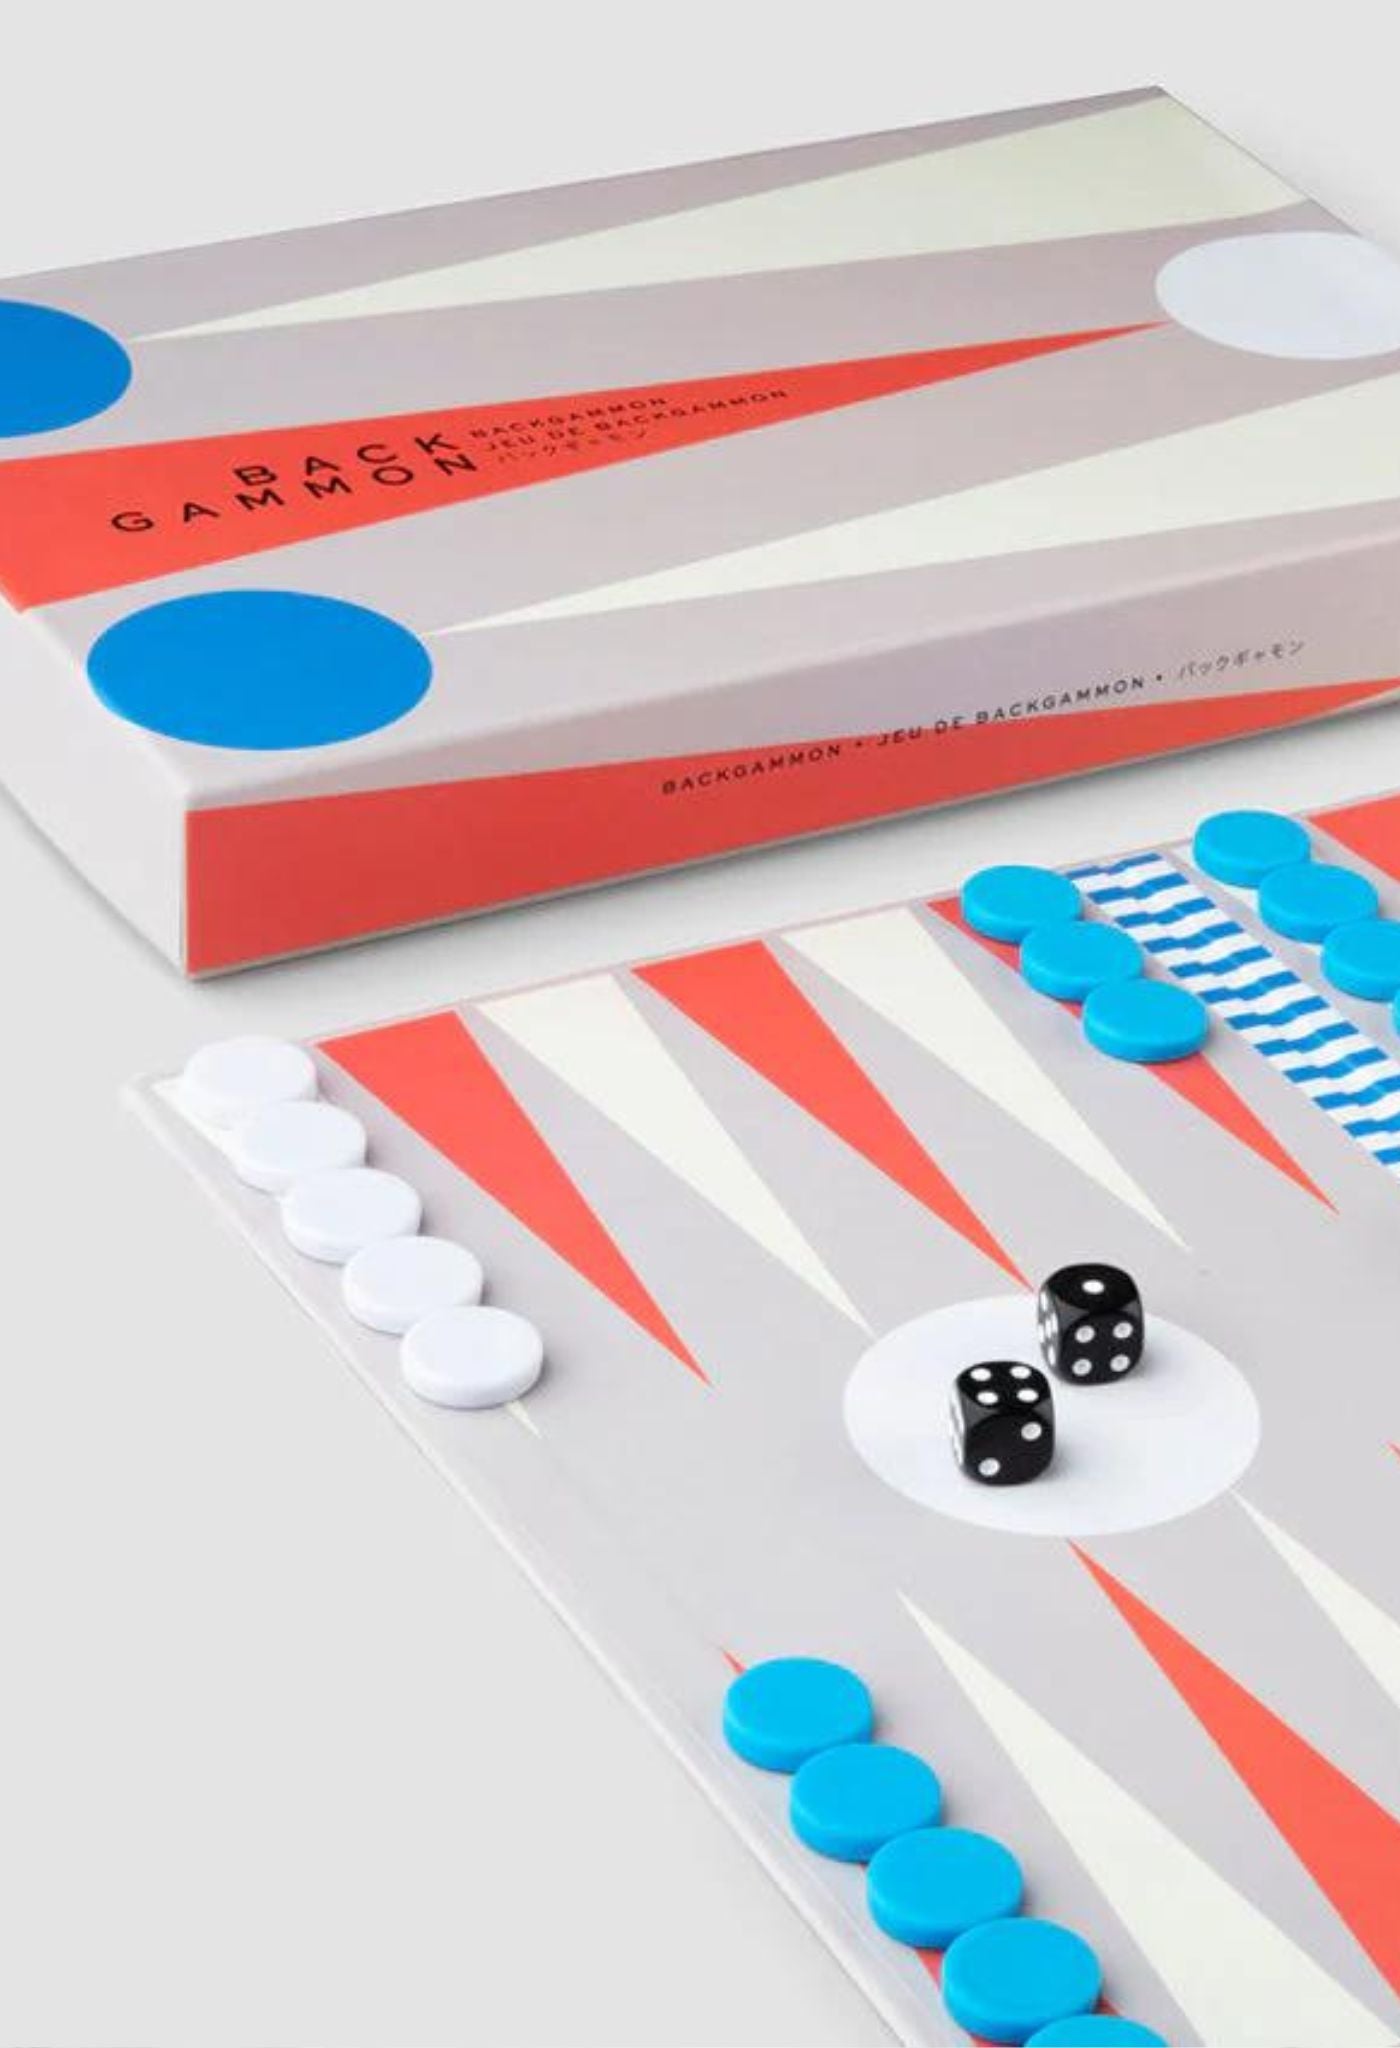 Backgammon-Spiel 